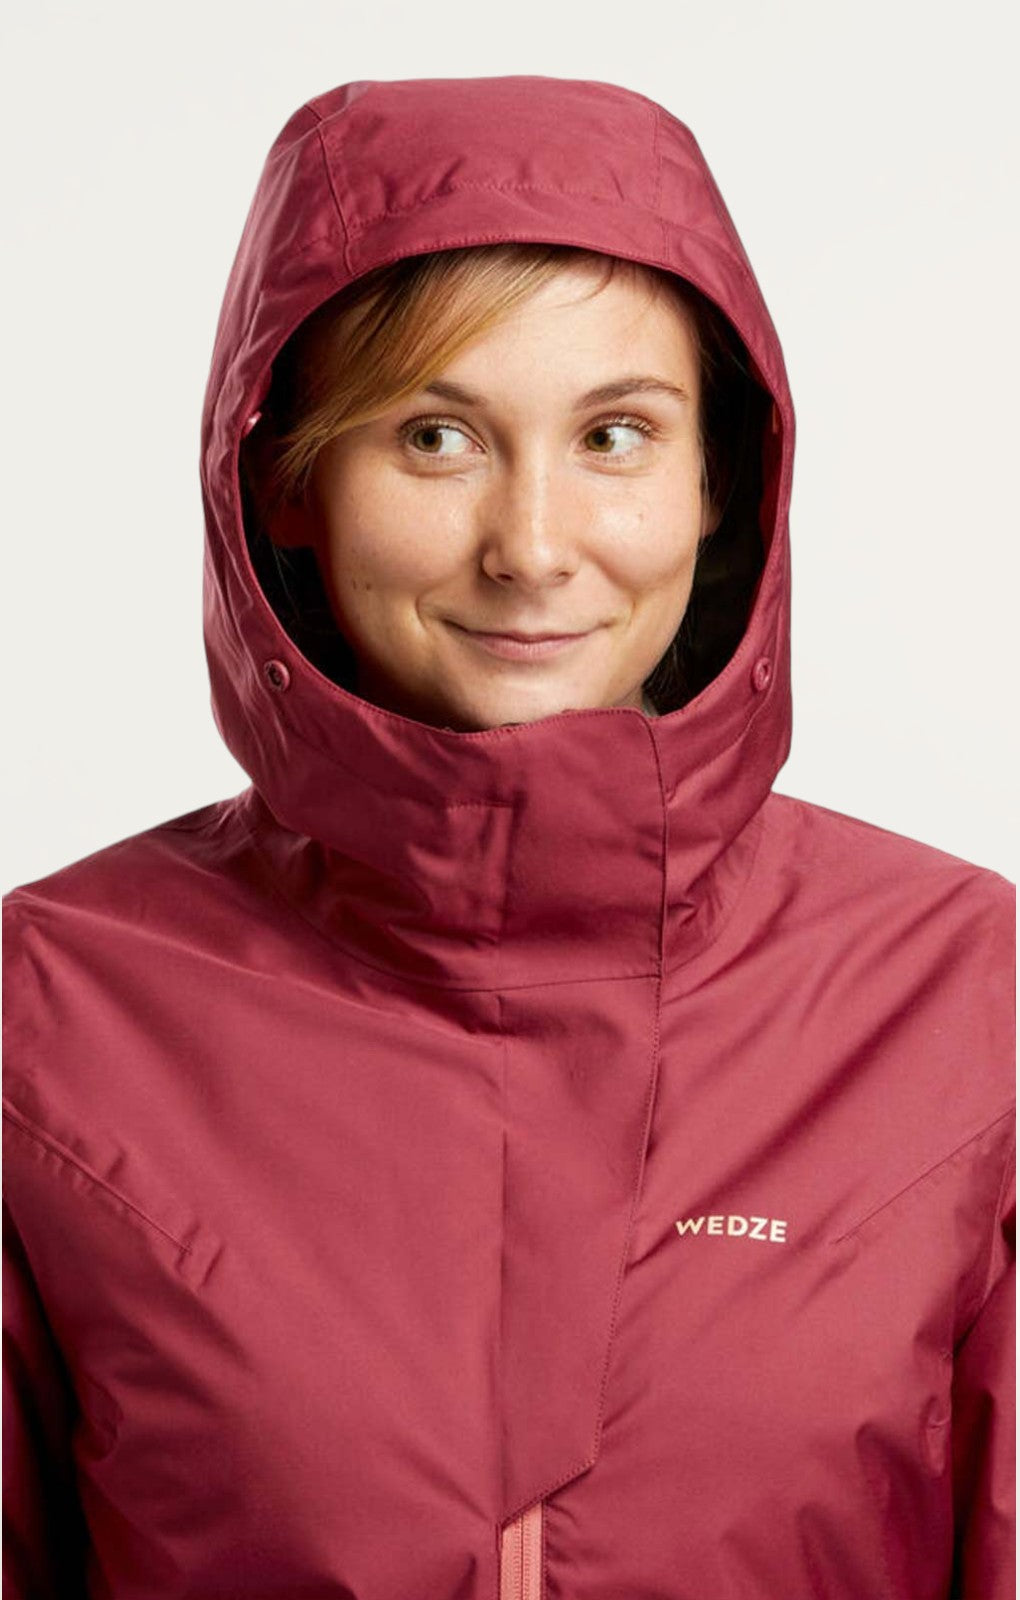 Decathlon Red Women's Ski Jacket product image